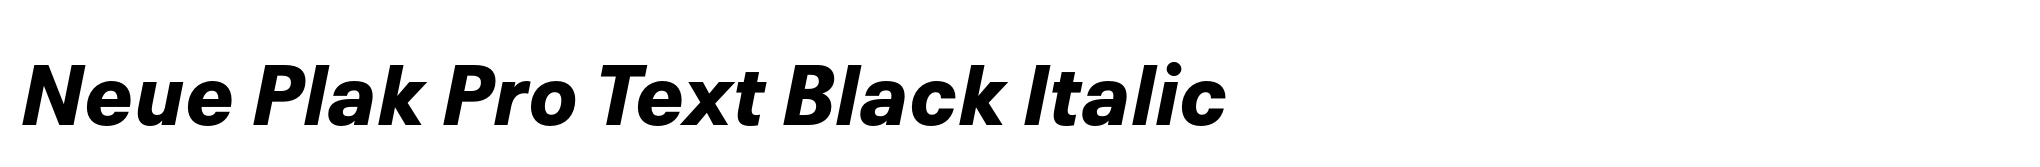 Neue Plak Pro Text Black Italic image